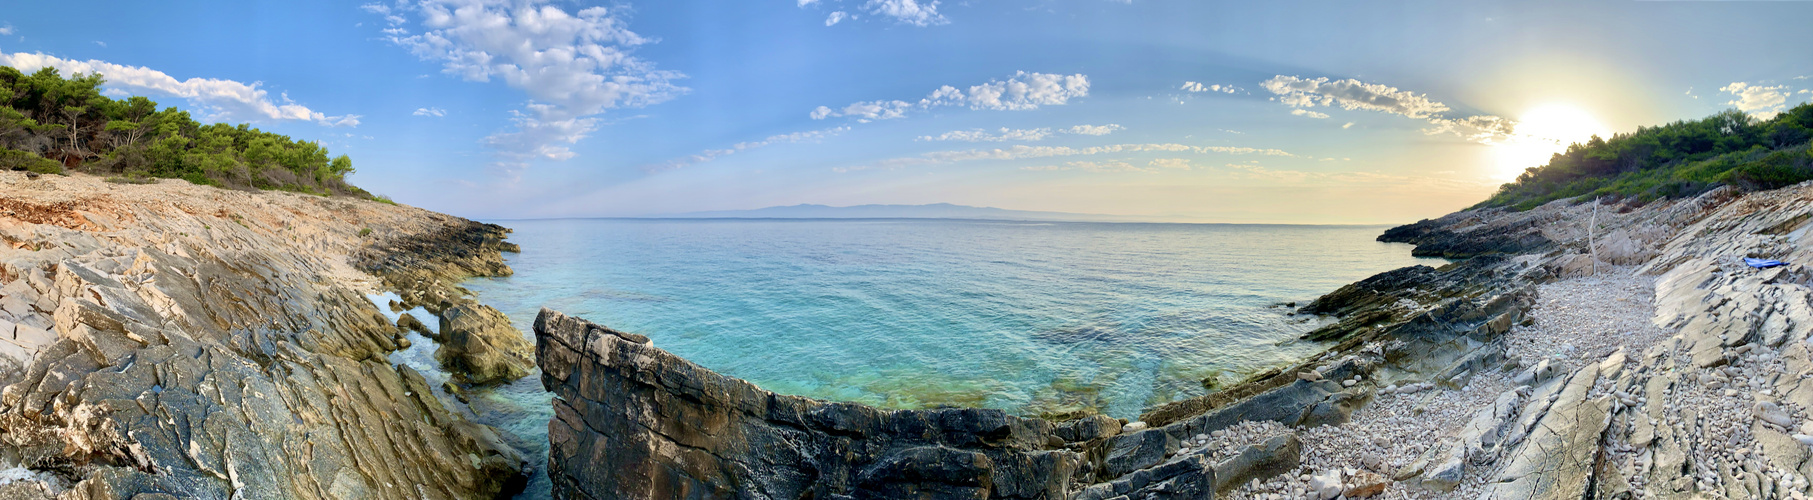 Panorama Insel Korkula, Kroatien 